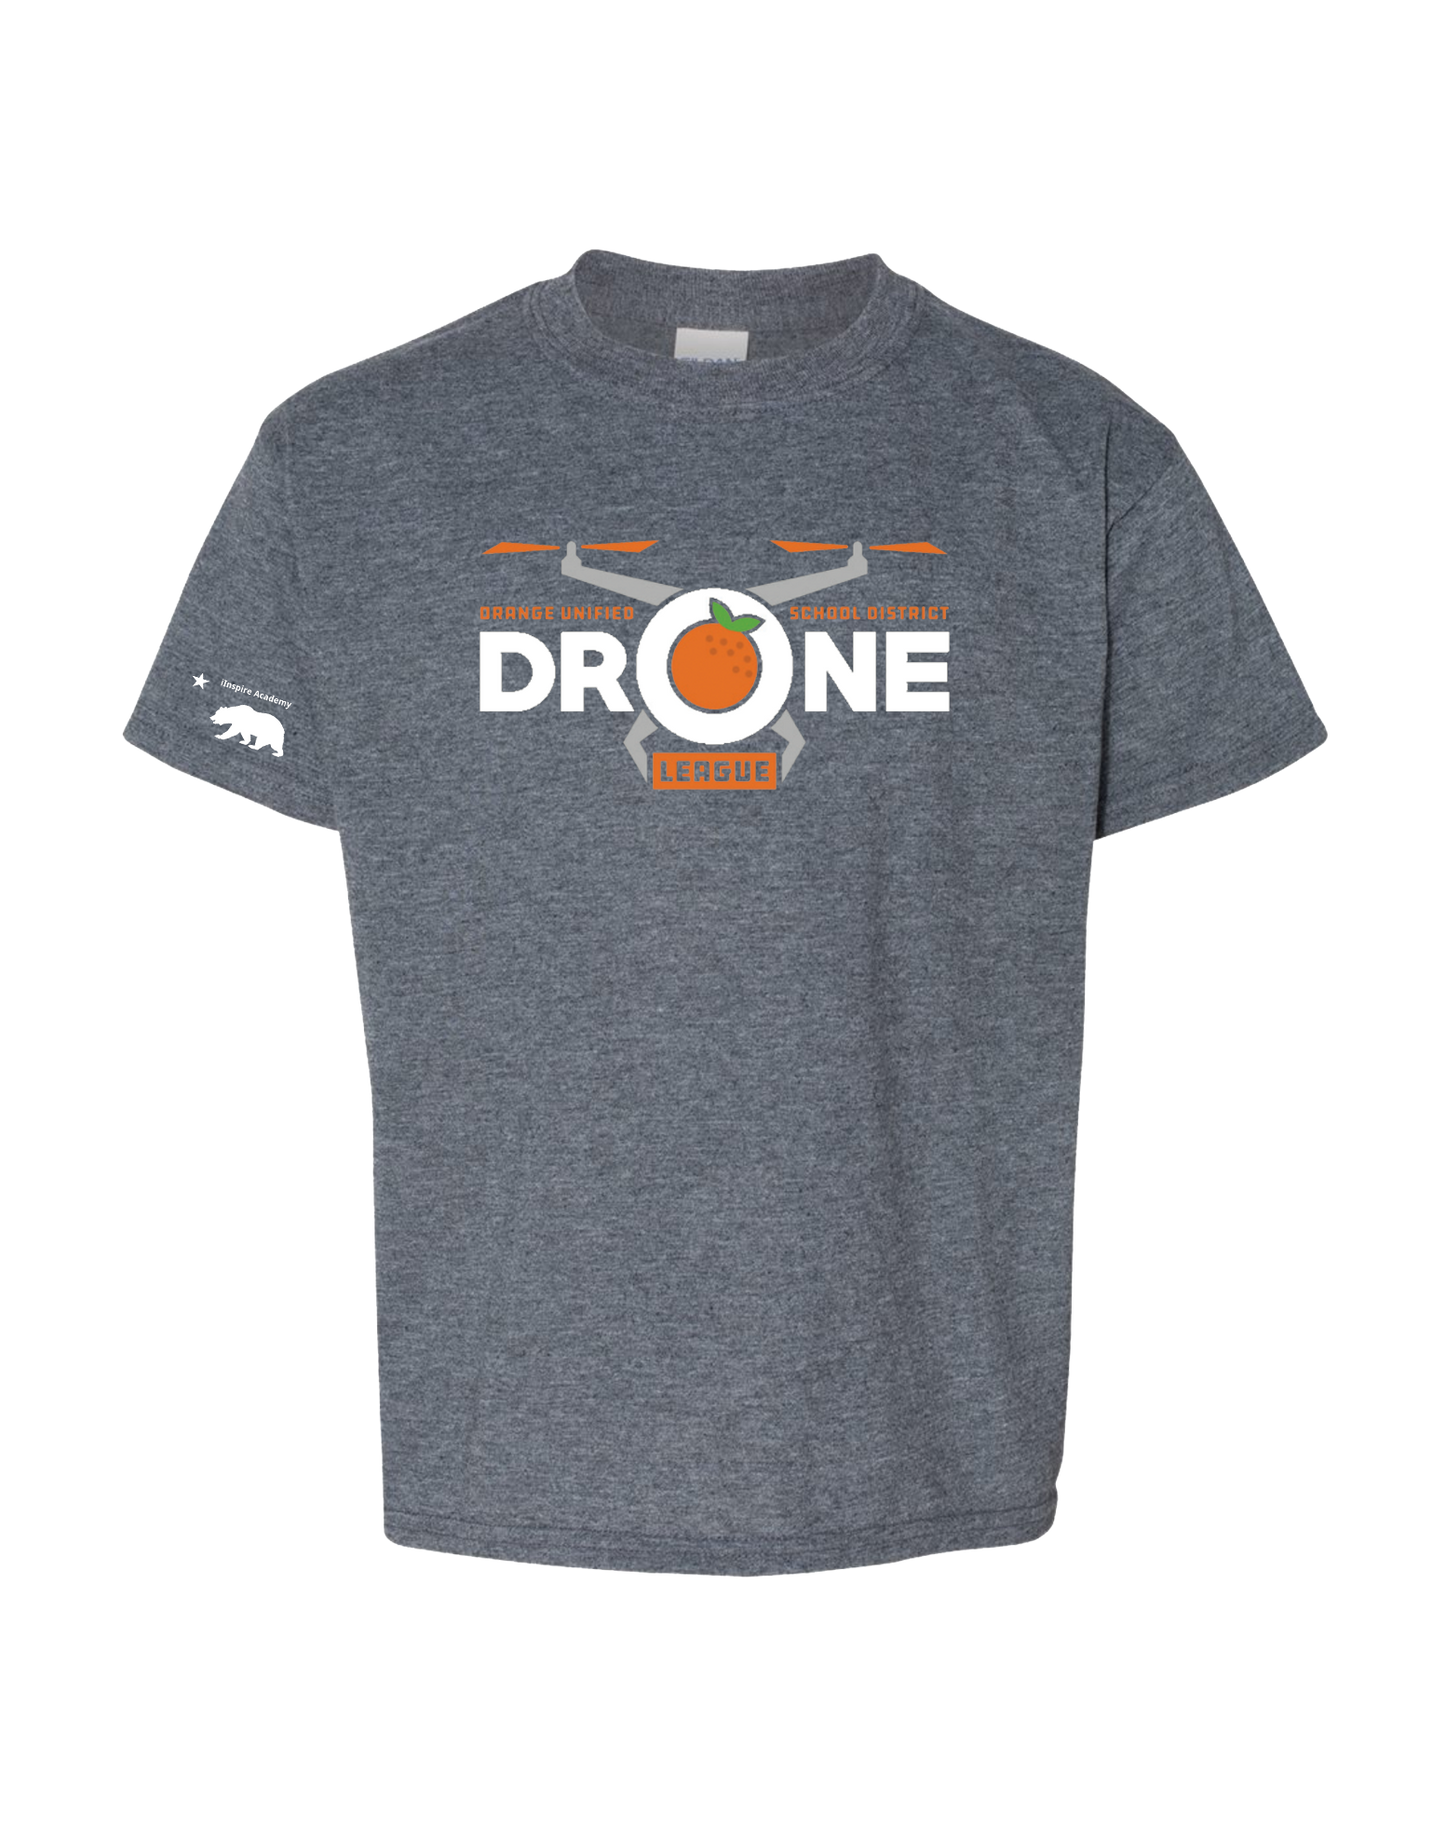 California Elementary - Drone league Youth T-shirt (Dark Heather)